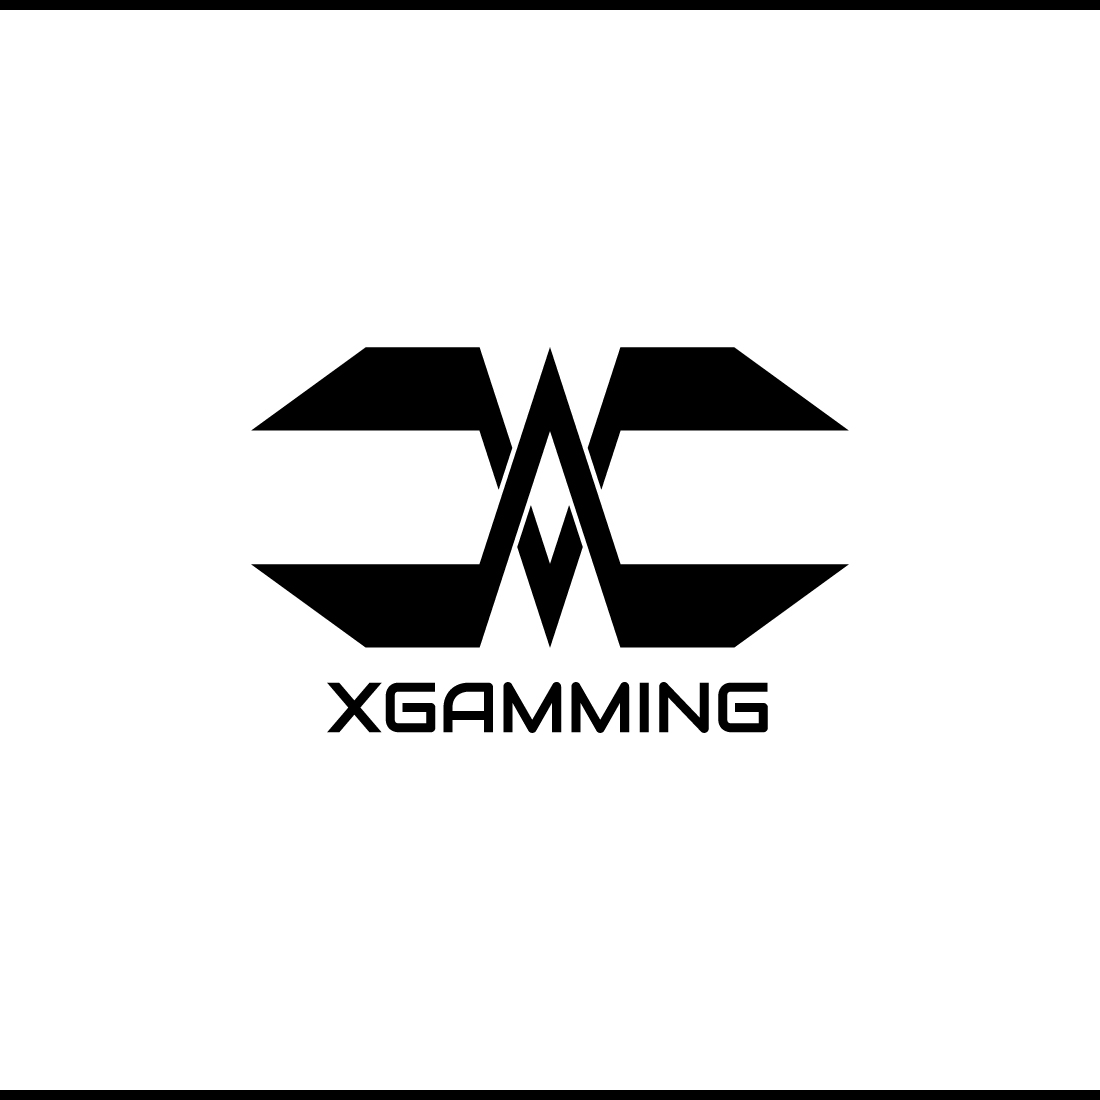 Minimalist Gamming Logo preview image.